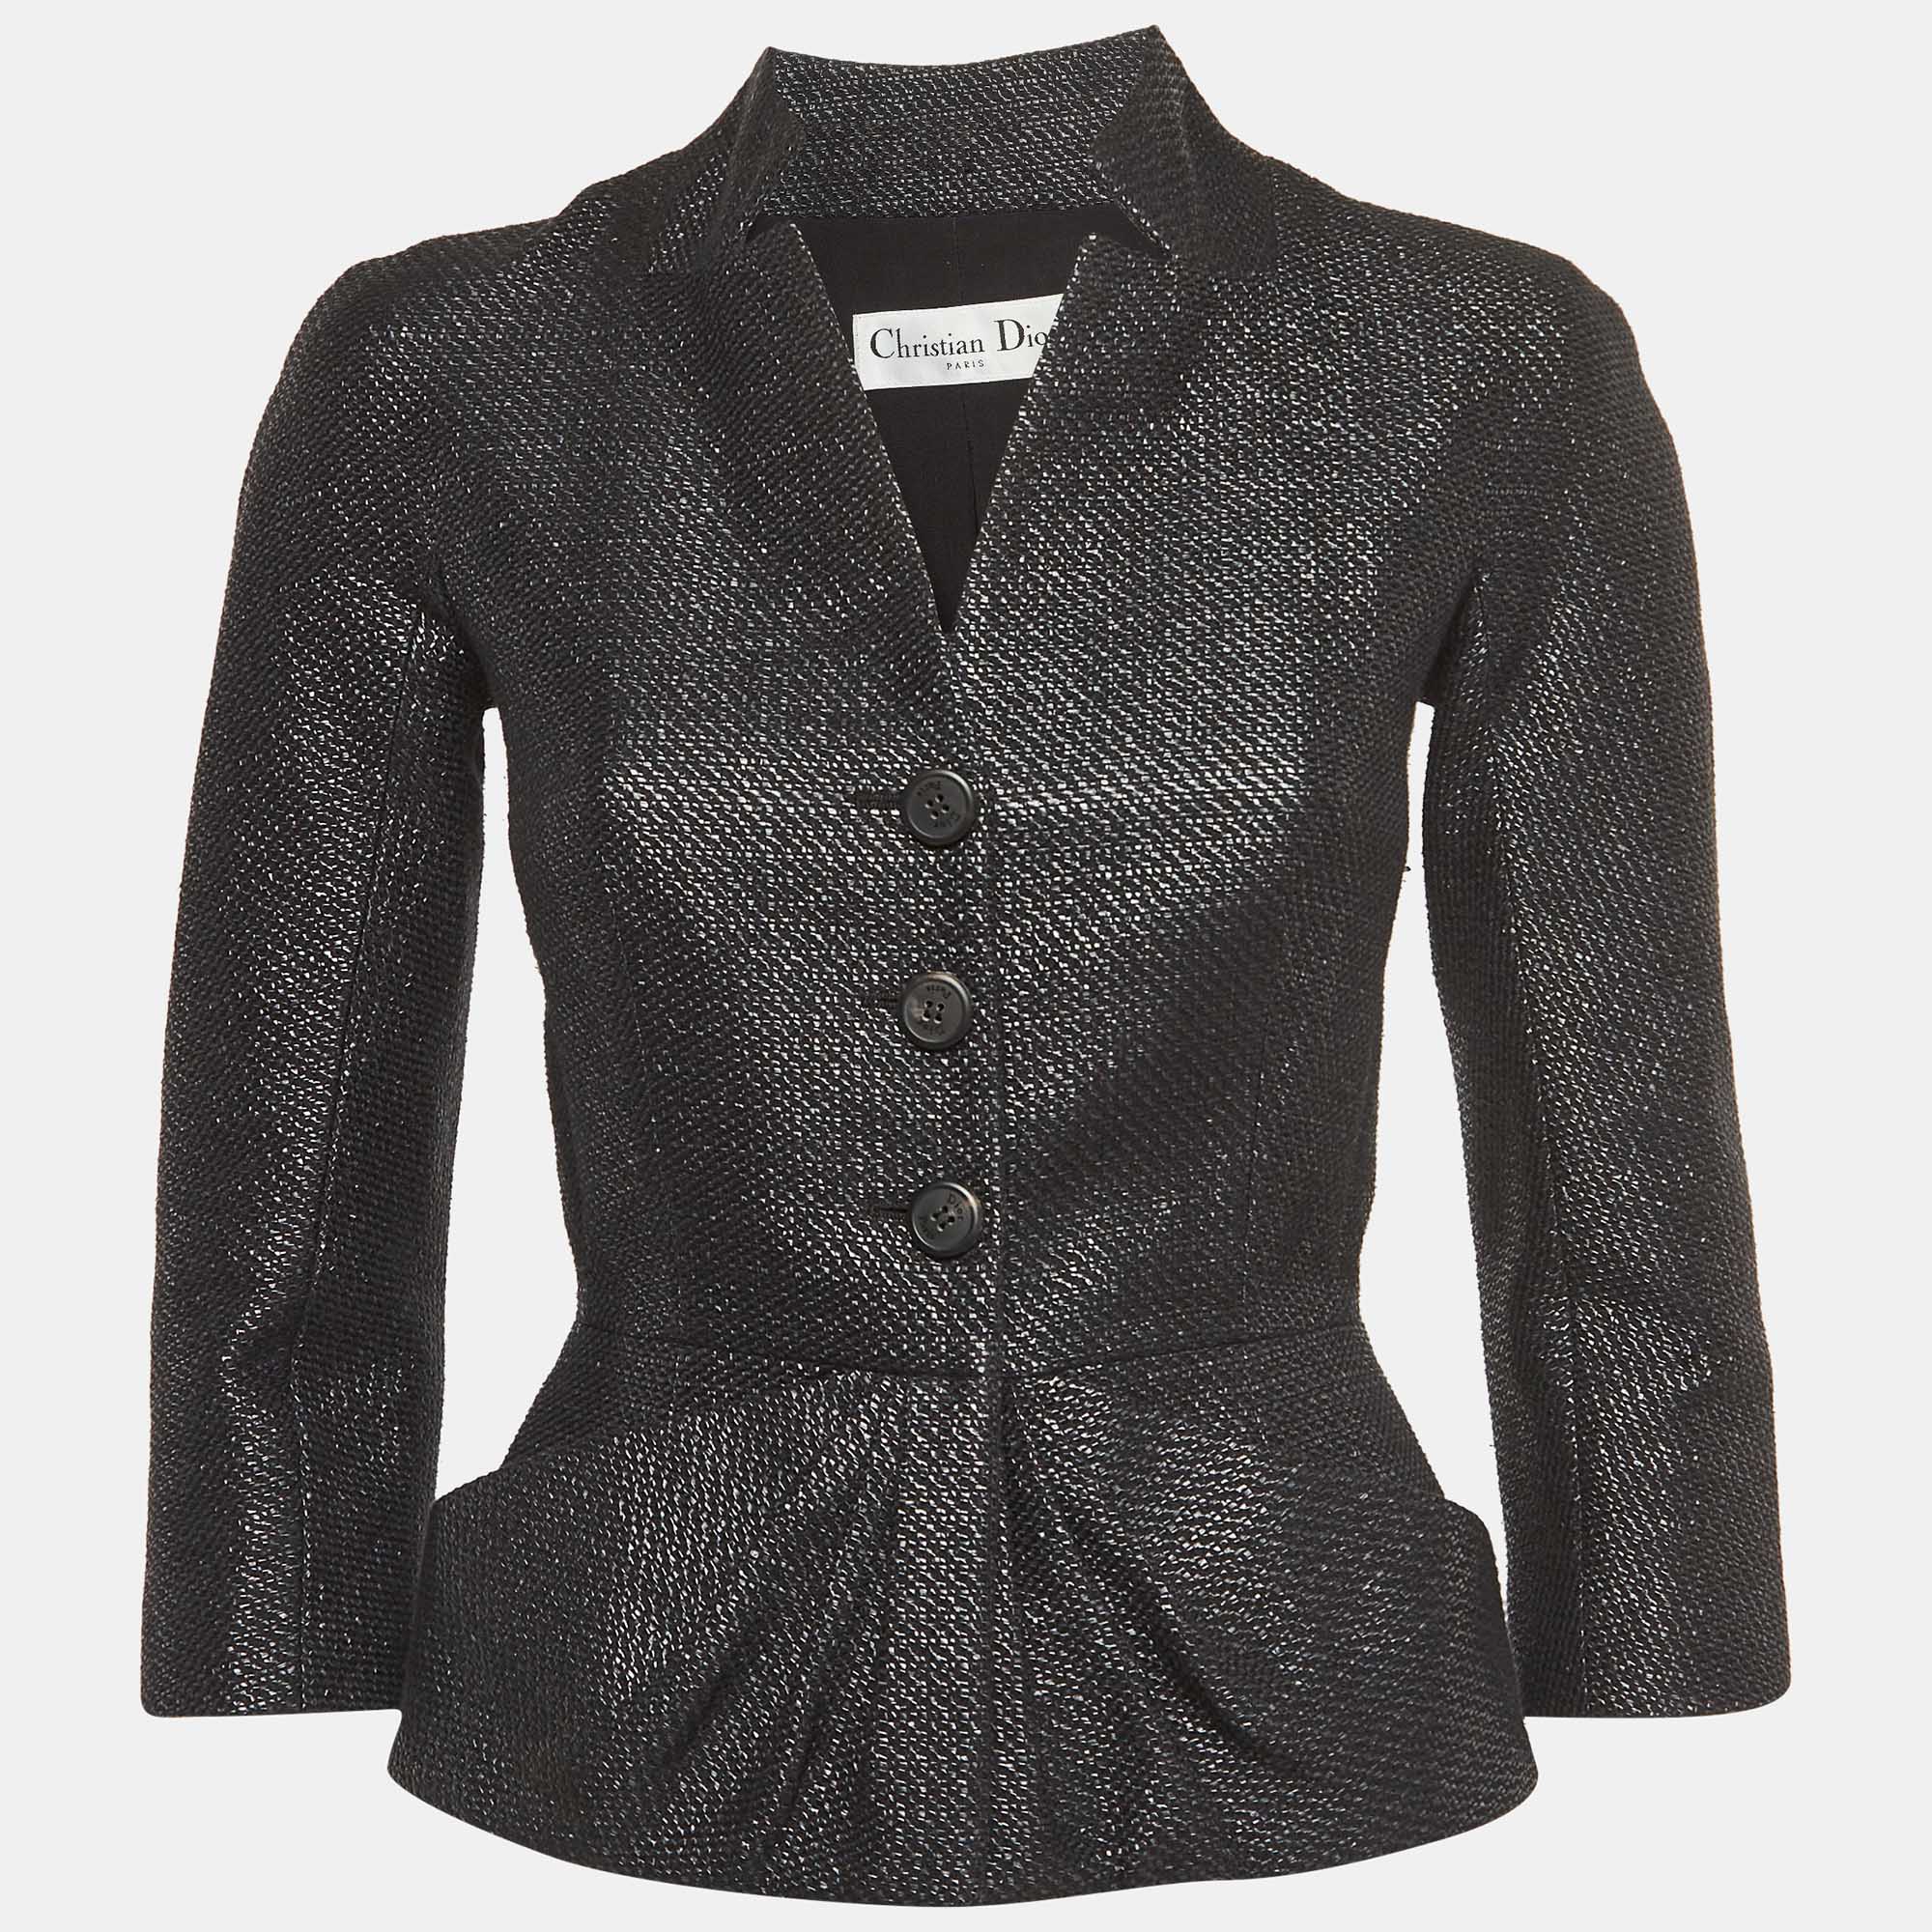 

Christian Dior Black Textured Cotton Blend Bar Jacket S